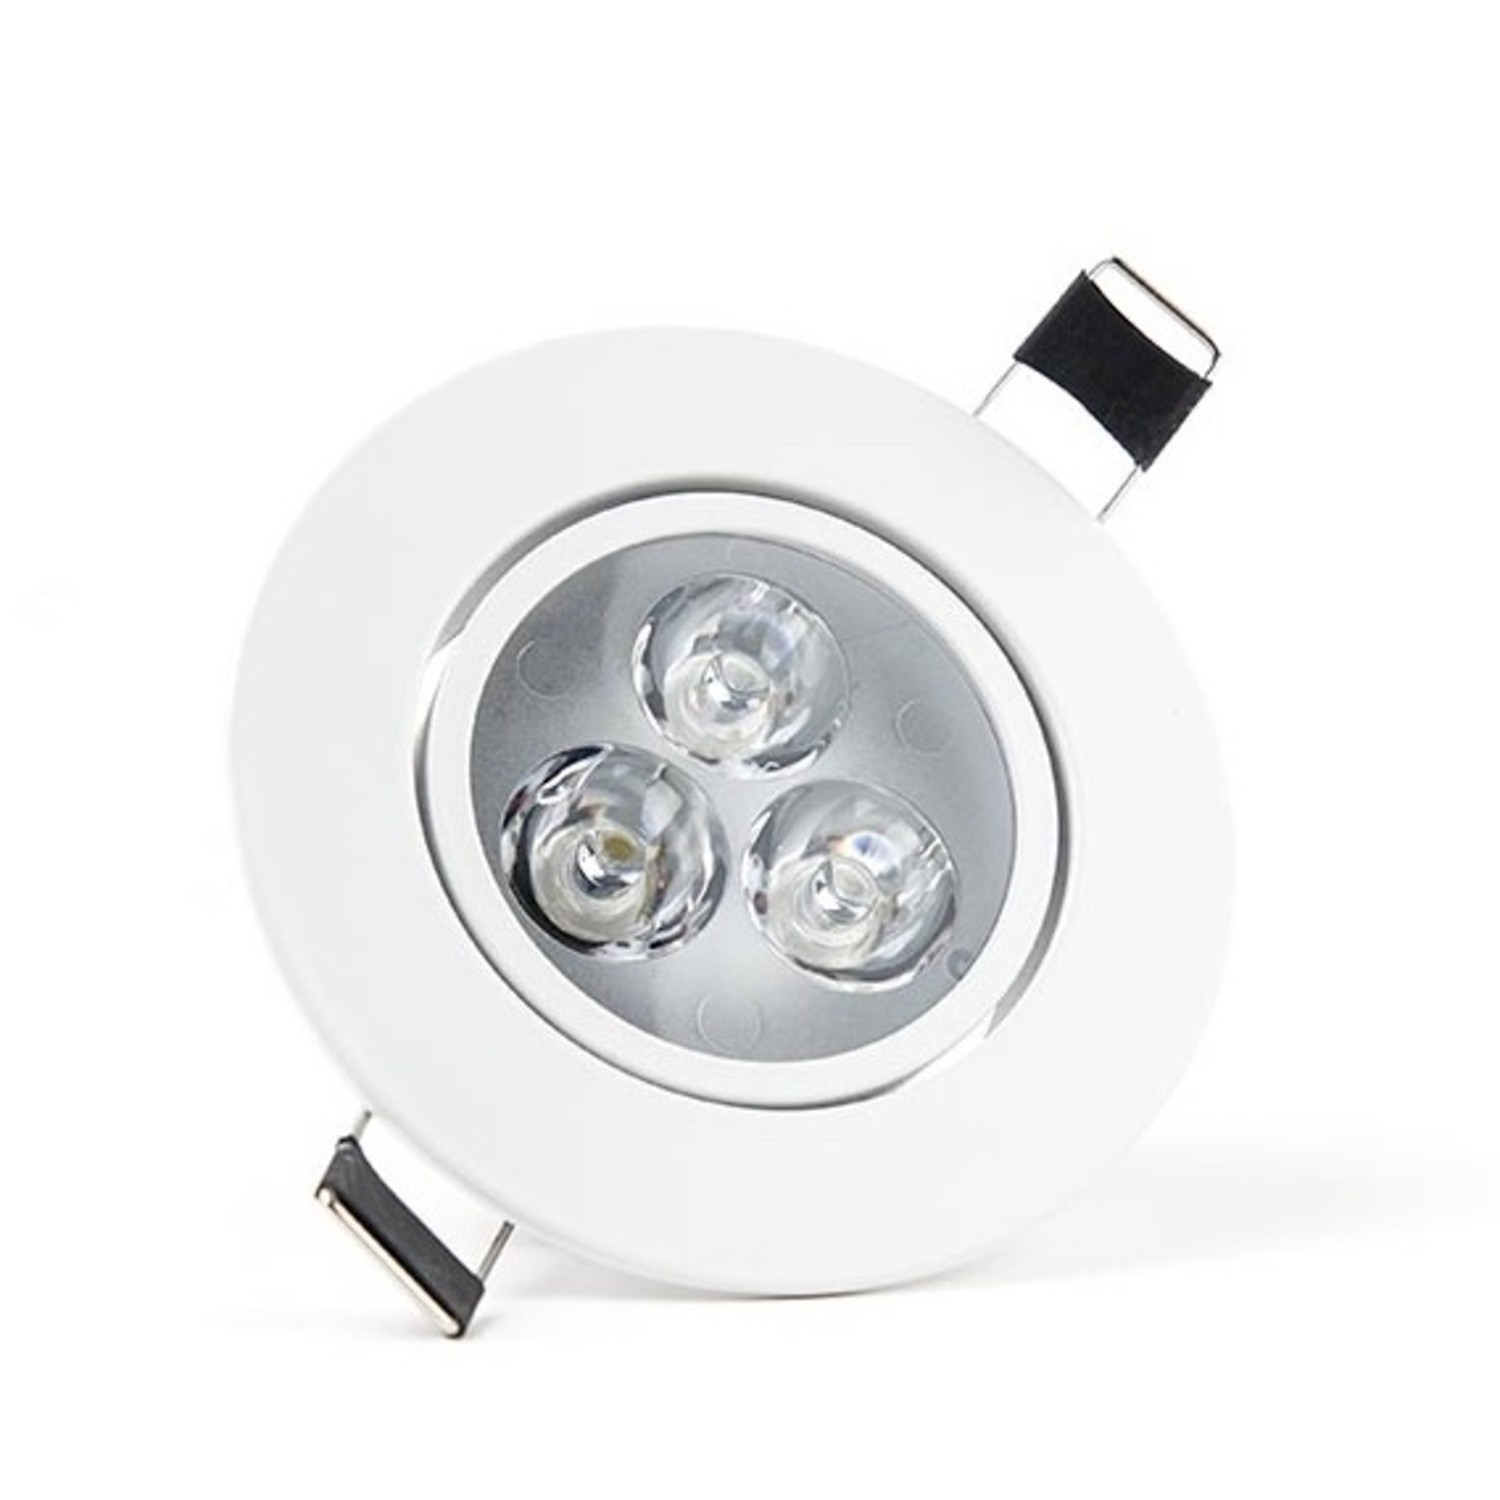 Noodlottig Rust uit essence LED inbouwspot Dimbaar - 3W vervangt 25W - 2700K warm wit licht - Kant -  Ledlichtdiscounter.nl